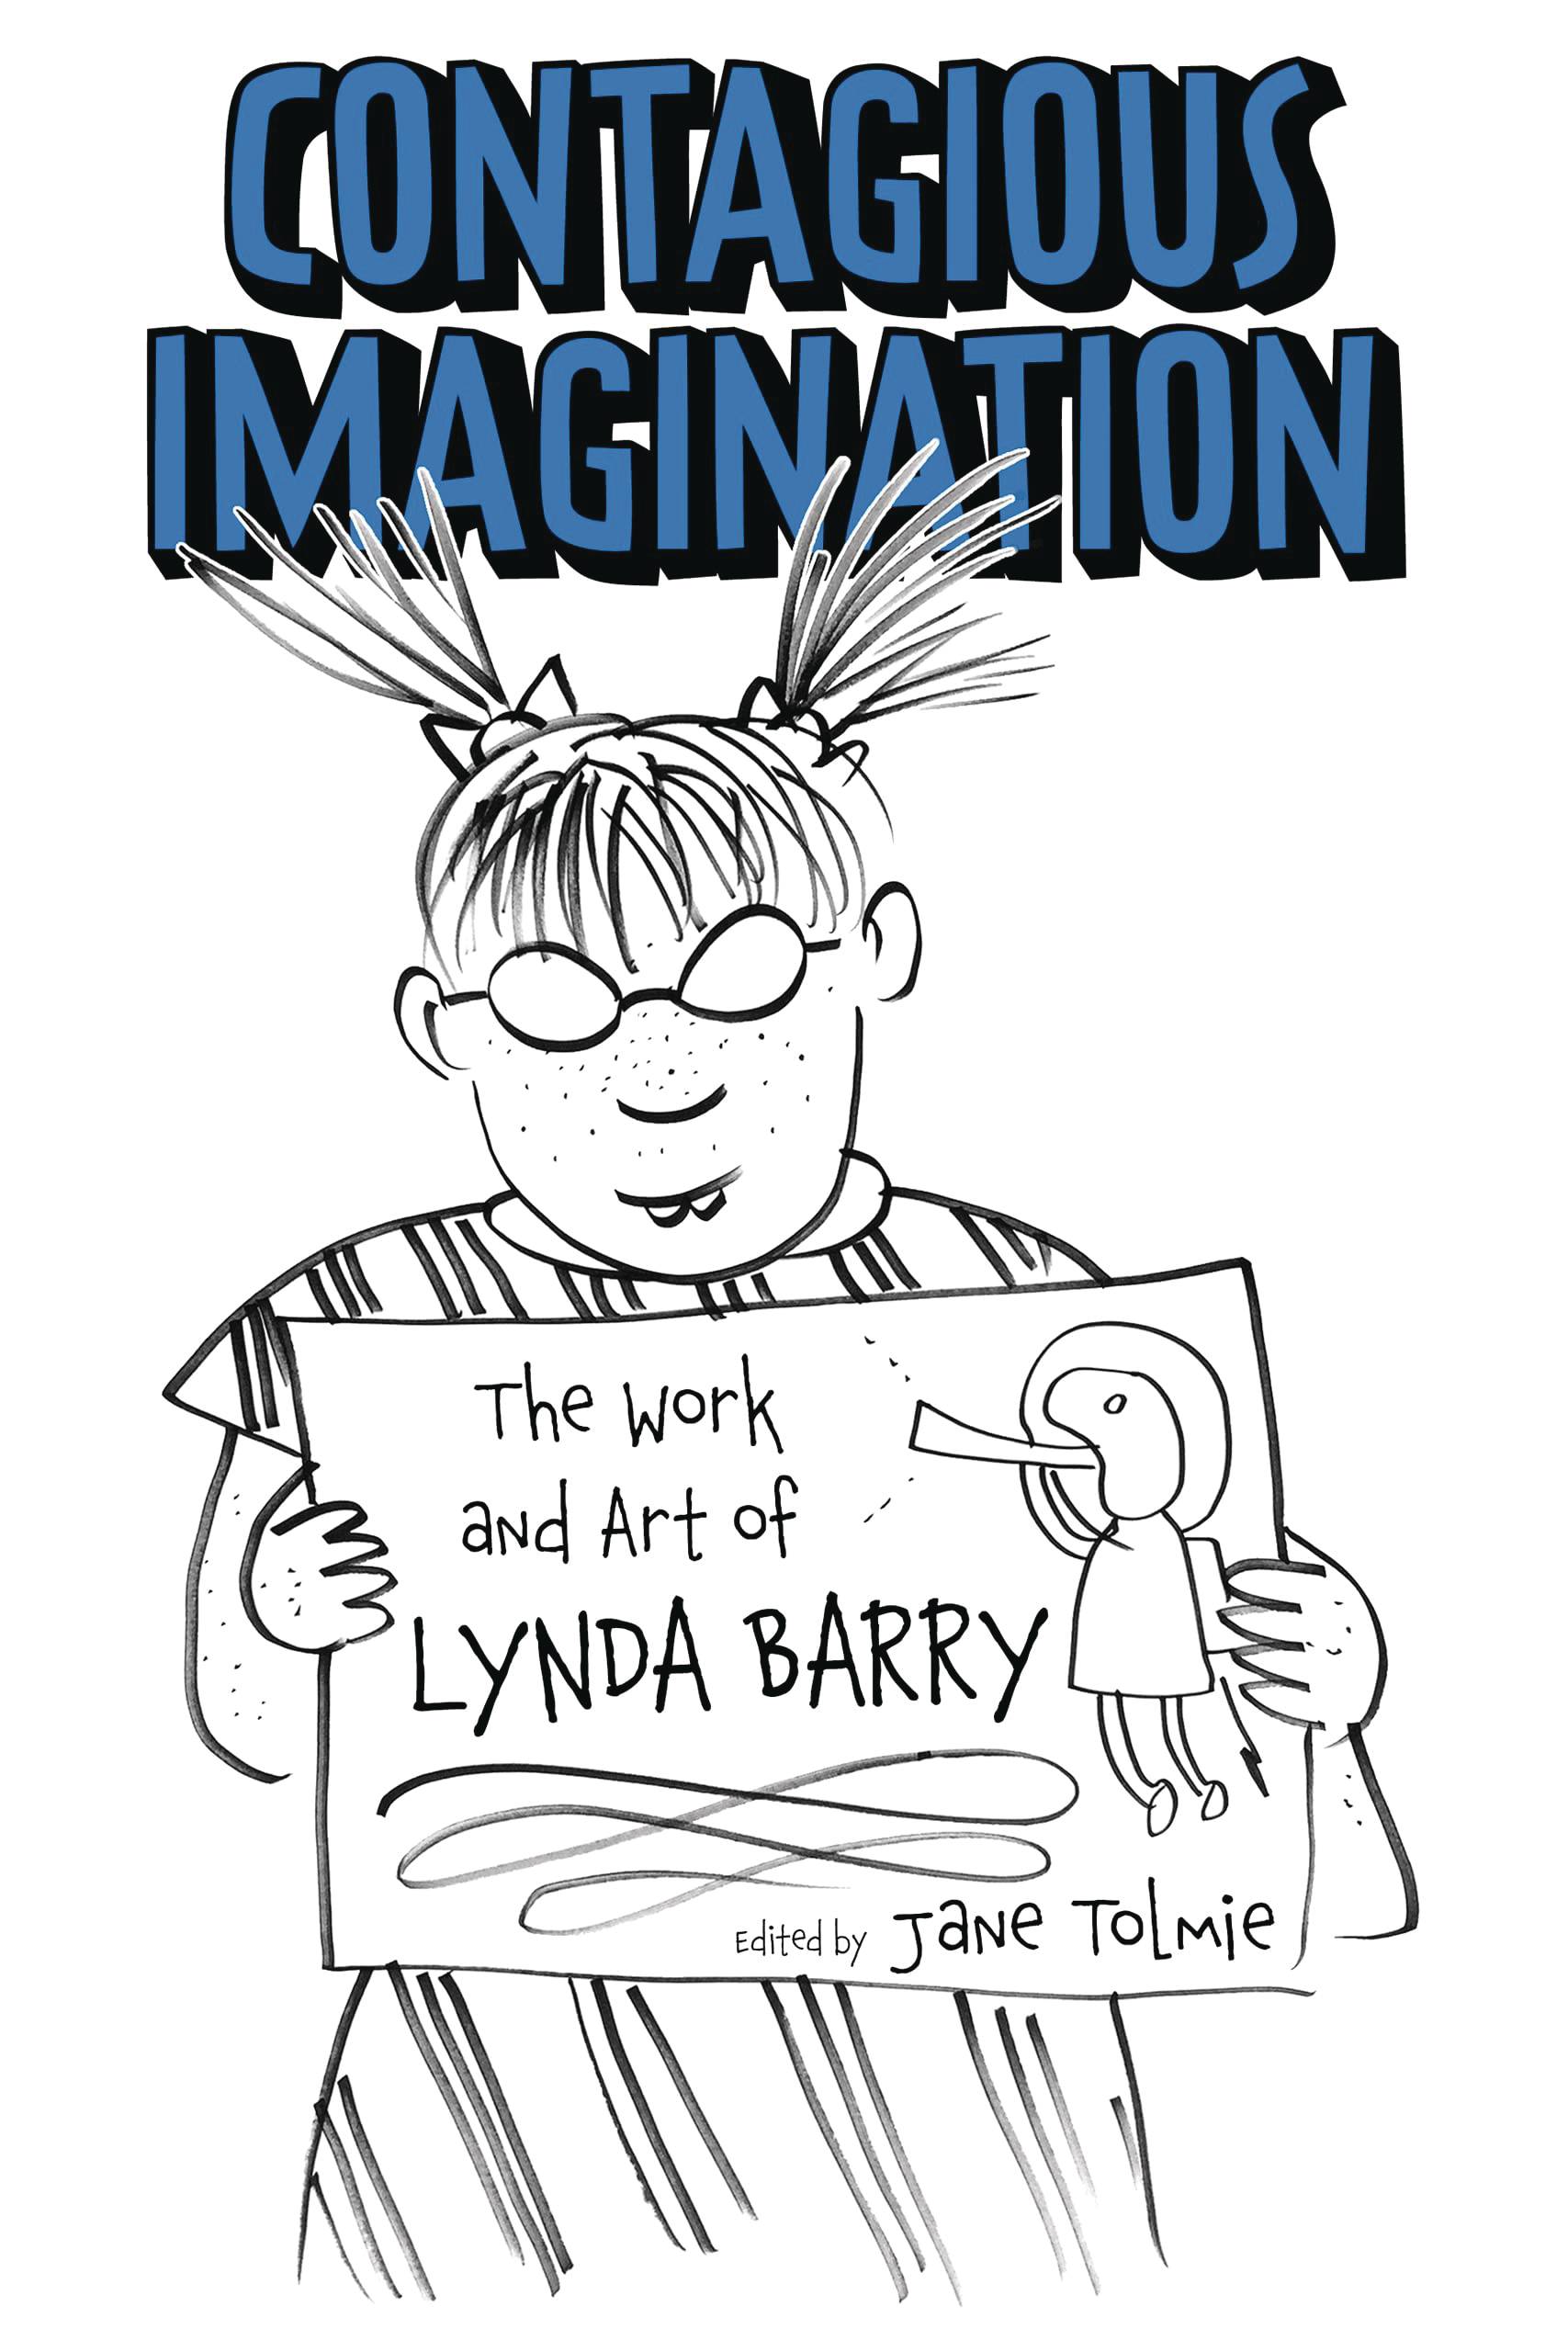 CONTAGIOUS IMAGINATION WORK & ART OF LYNDA BARRY SC